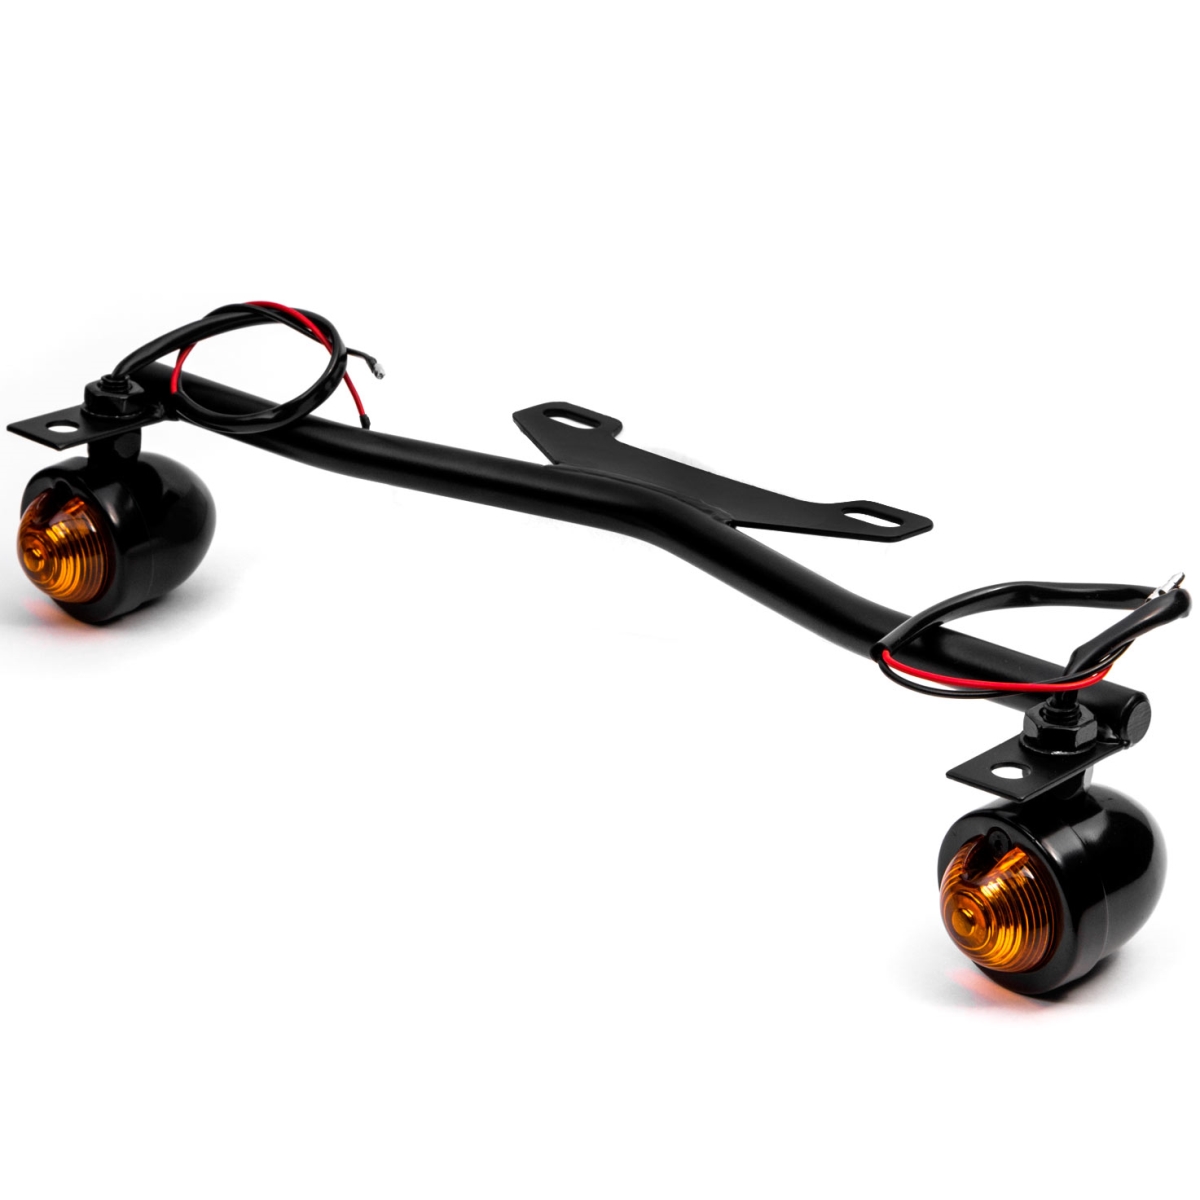 Jbm-900-b Driving Passing Lamp Spot Light Bar Bracket With Turn Signals Motorcycle, Black